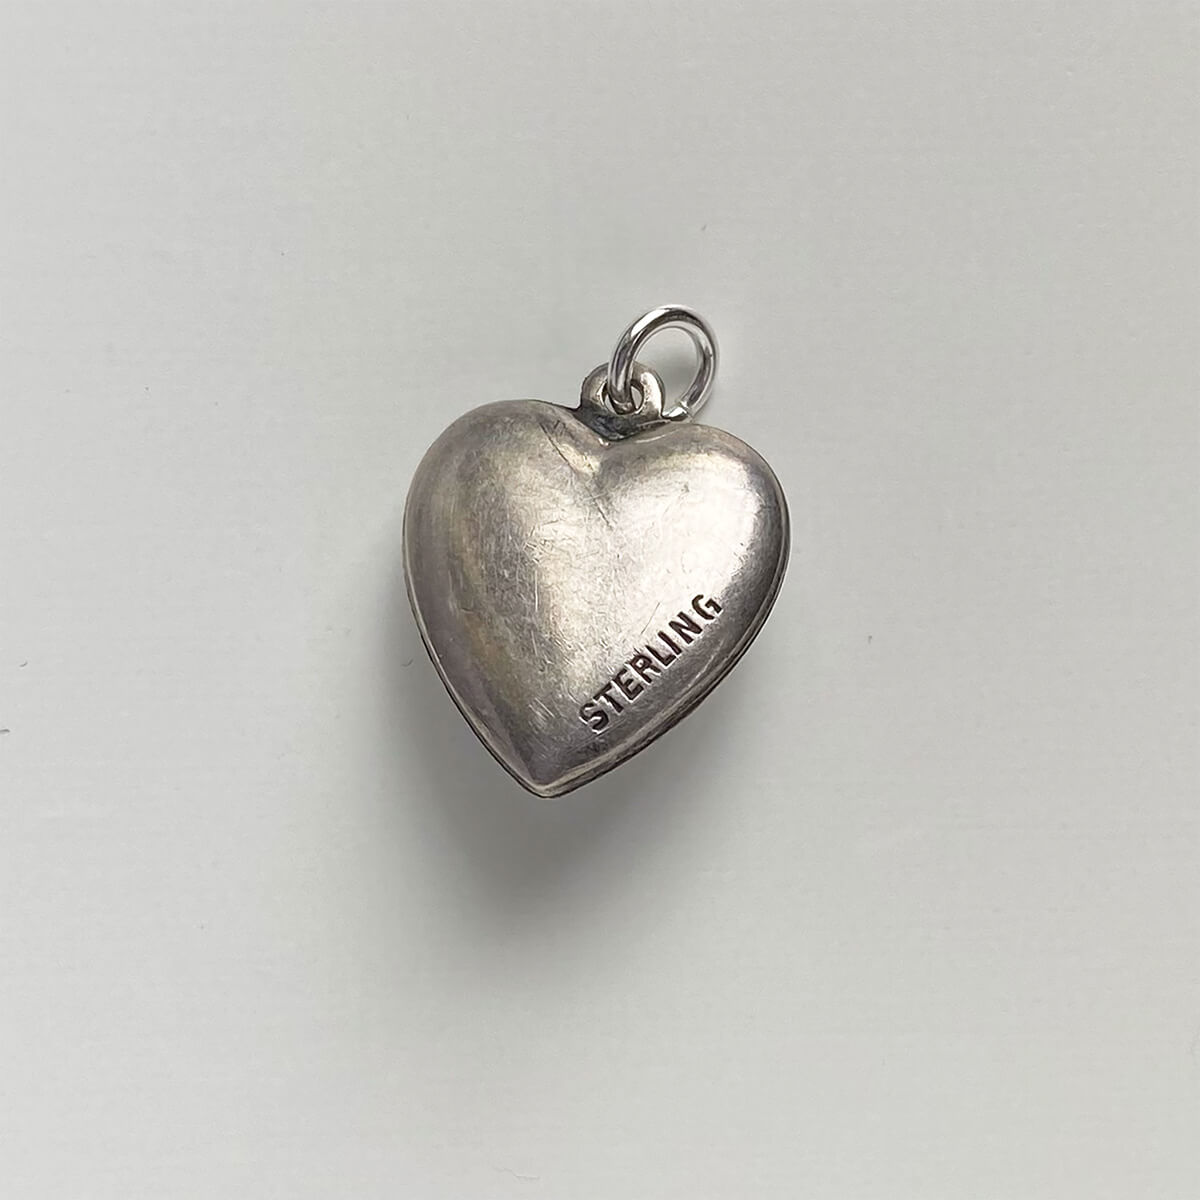 Vintage enamel puffed heart charm